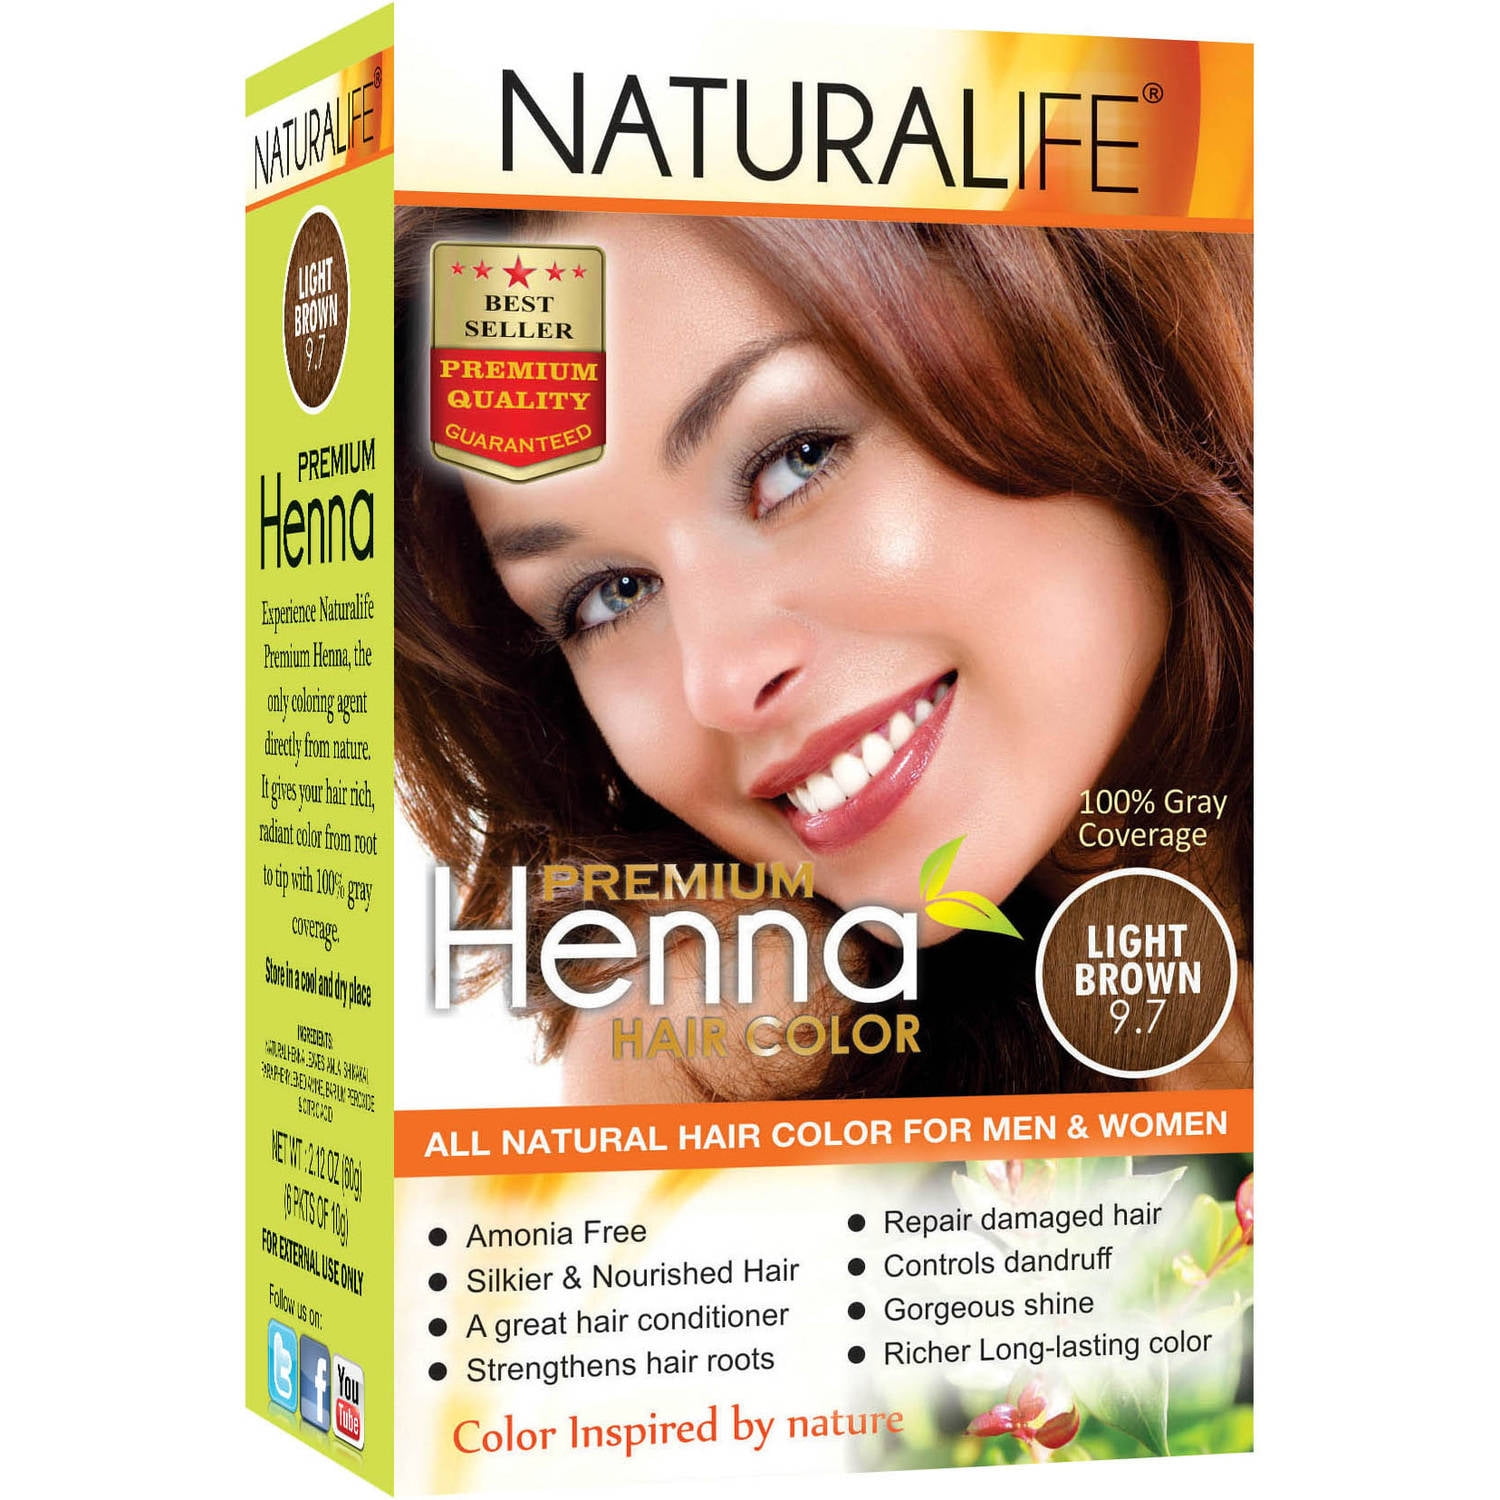 Naturalife Henna Natural Hair Color for Men & Women, Light Brown  -  